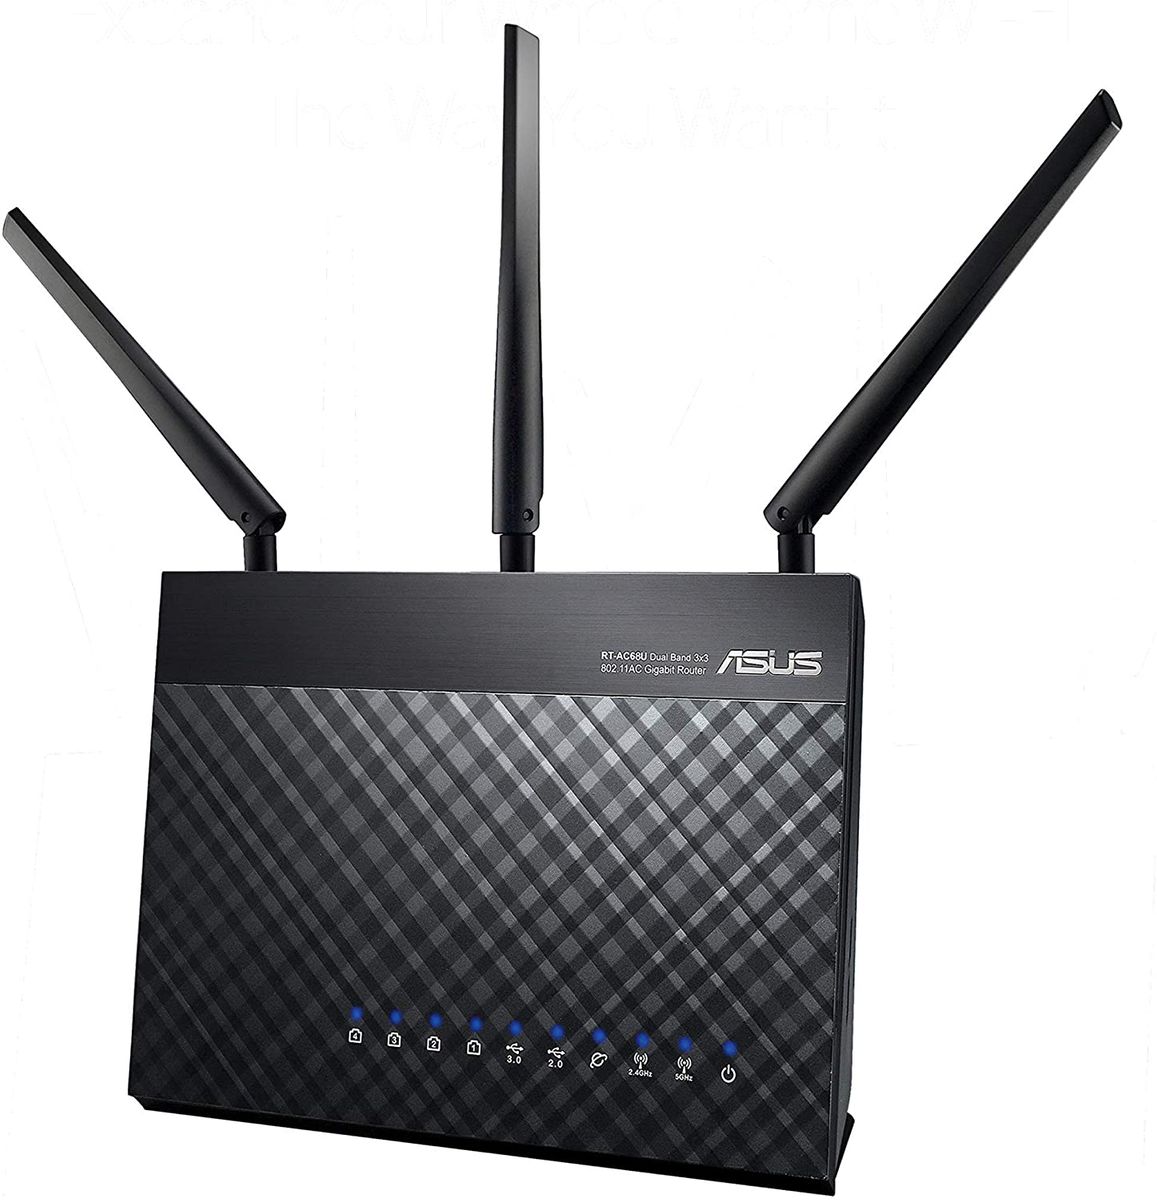 ASUS RT-AC68U WLAN Router Dual-Band (2.4 GHz/5 GHz) Gigabit Ethernet 3G 4G